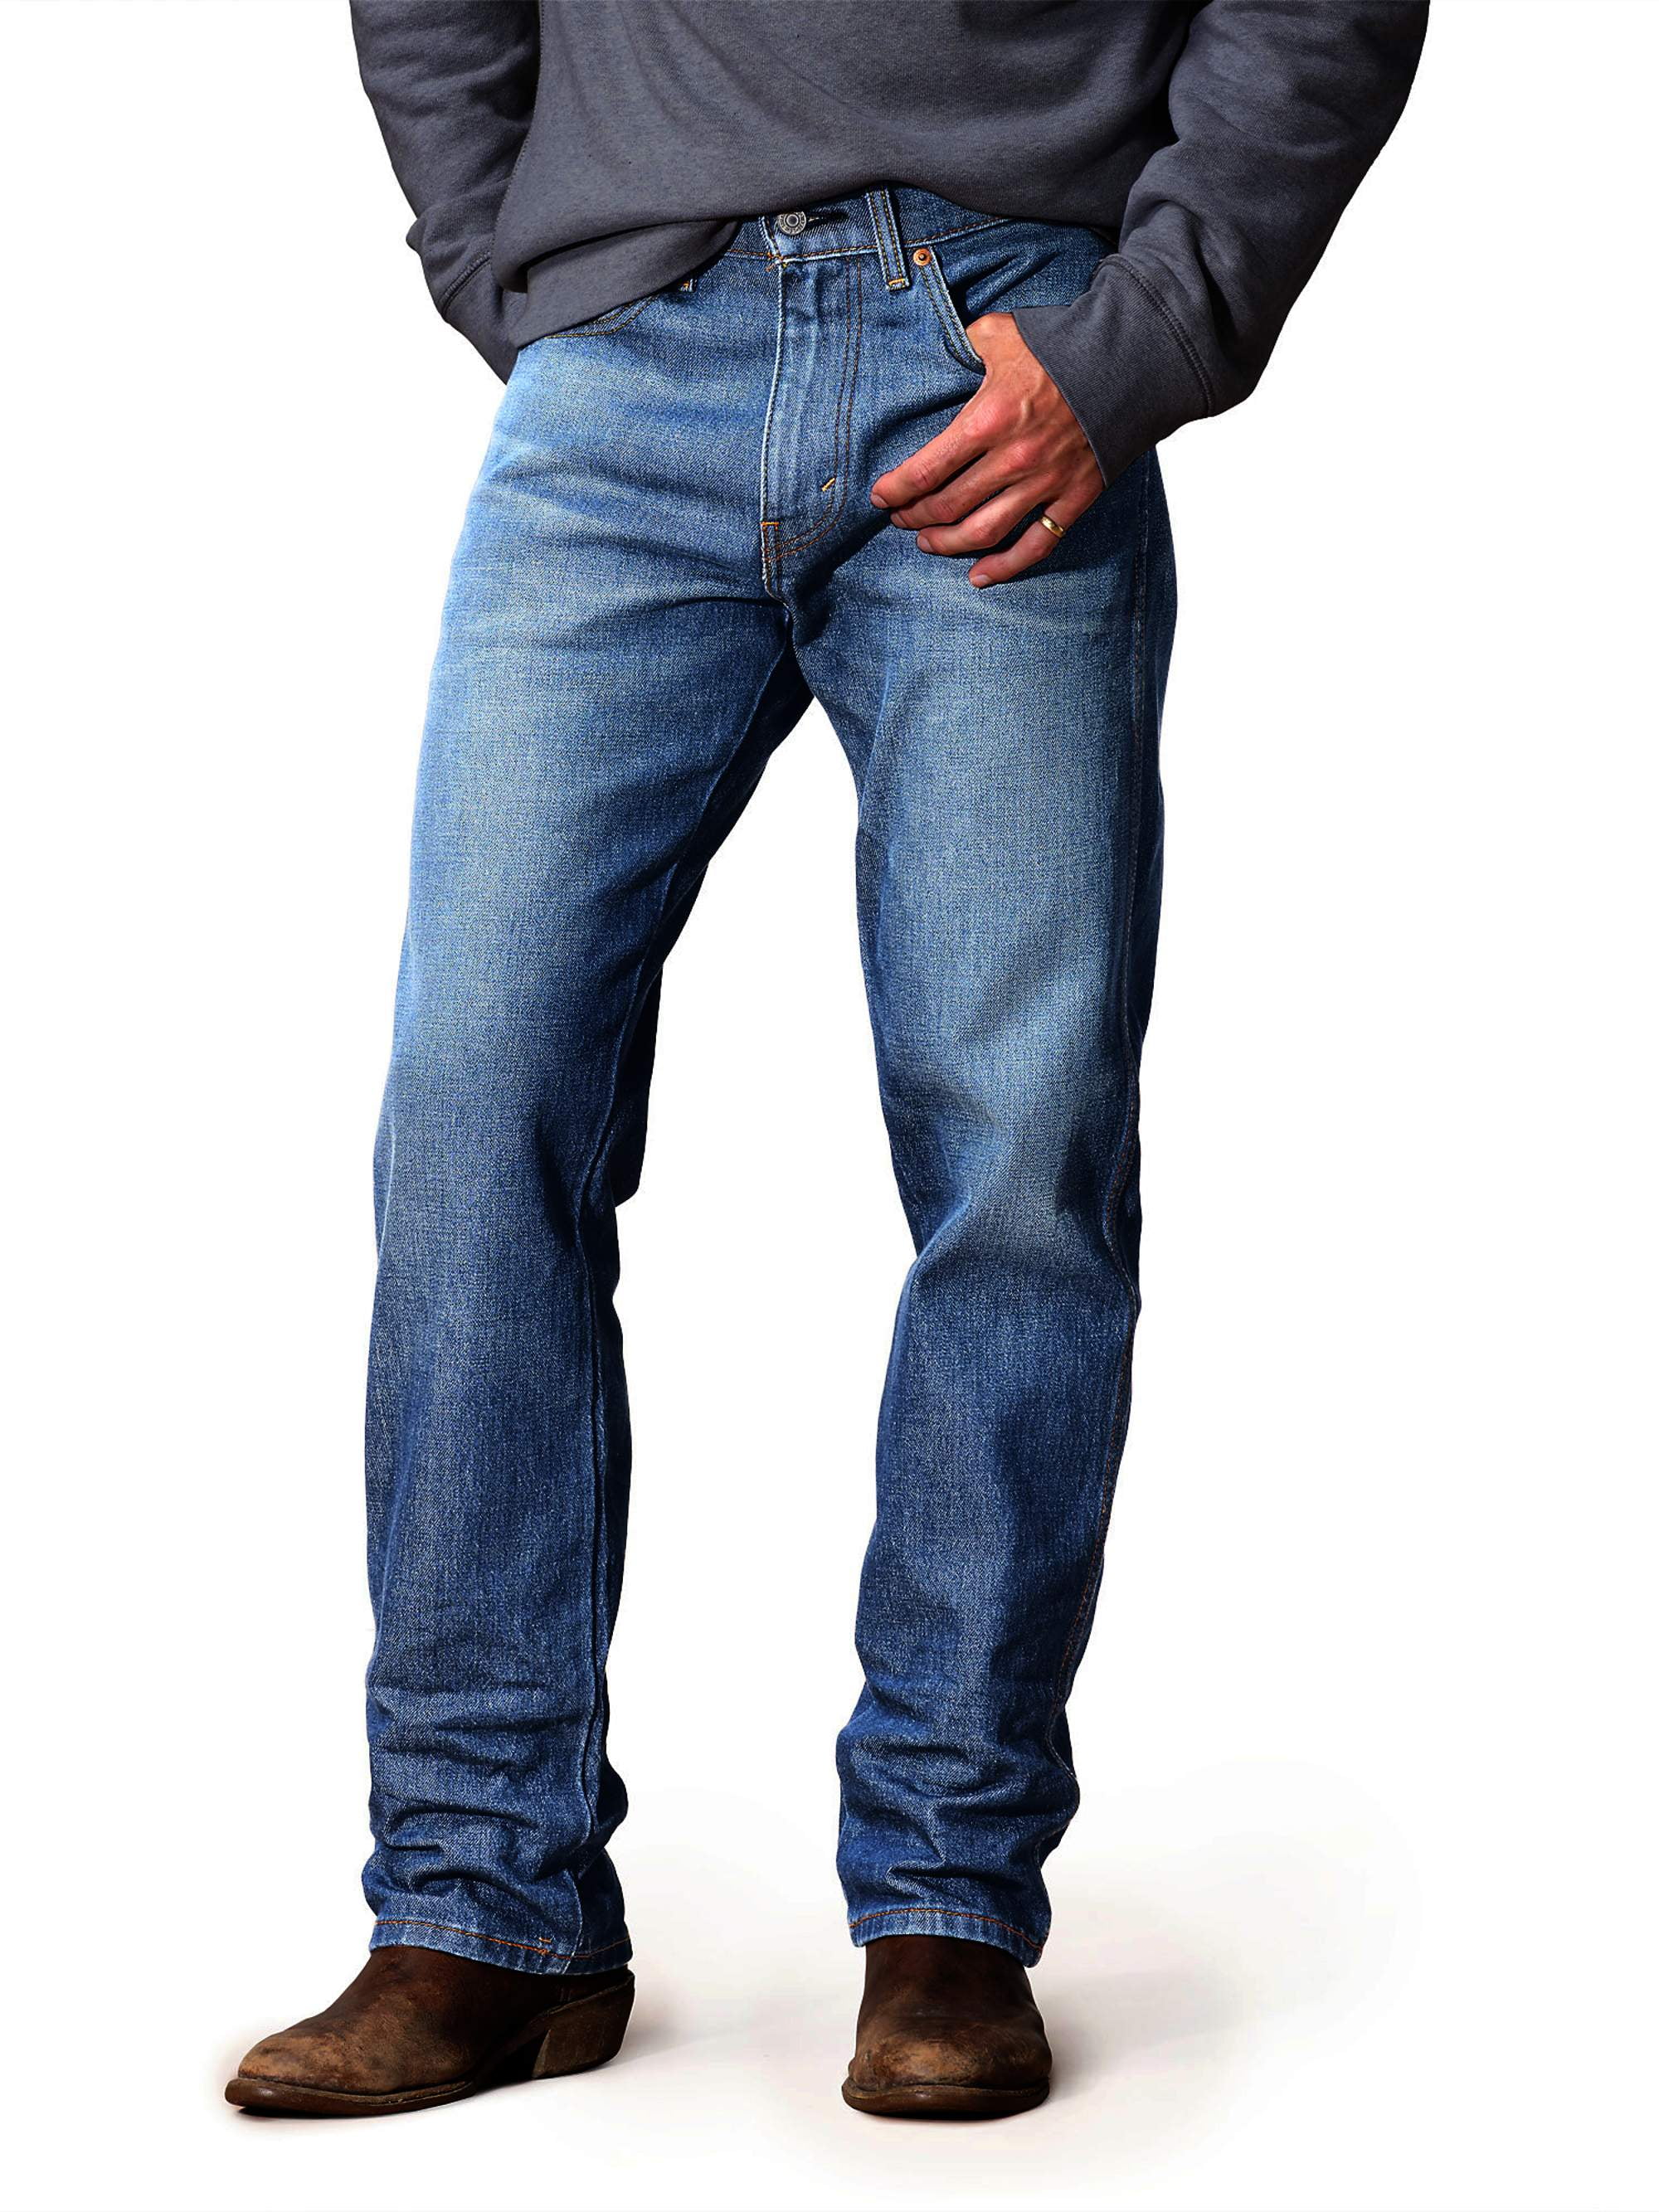 average price of levi jeans